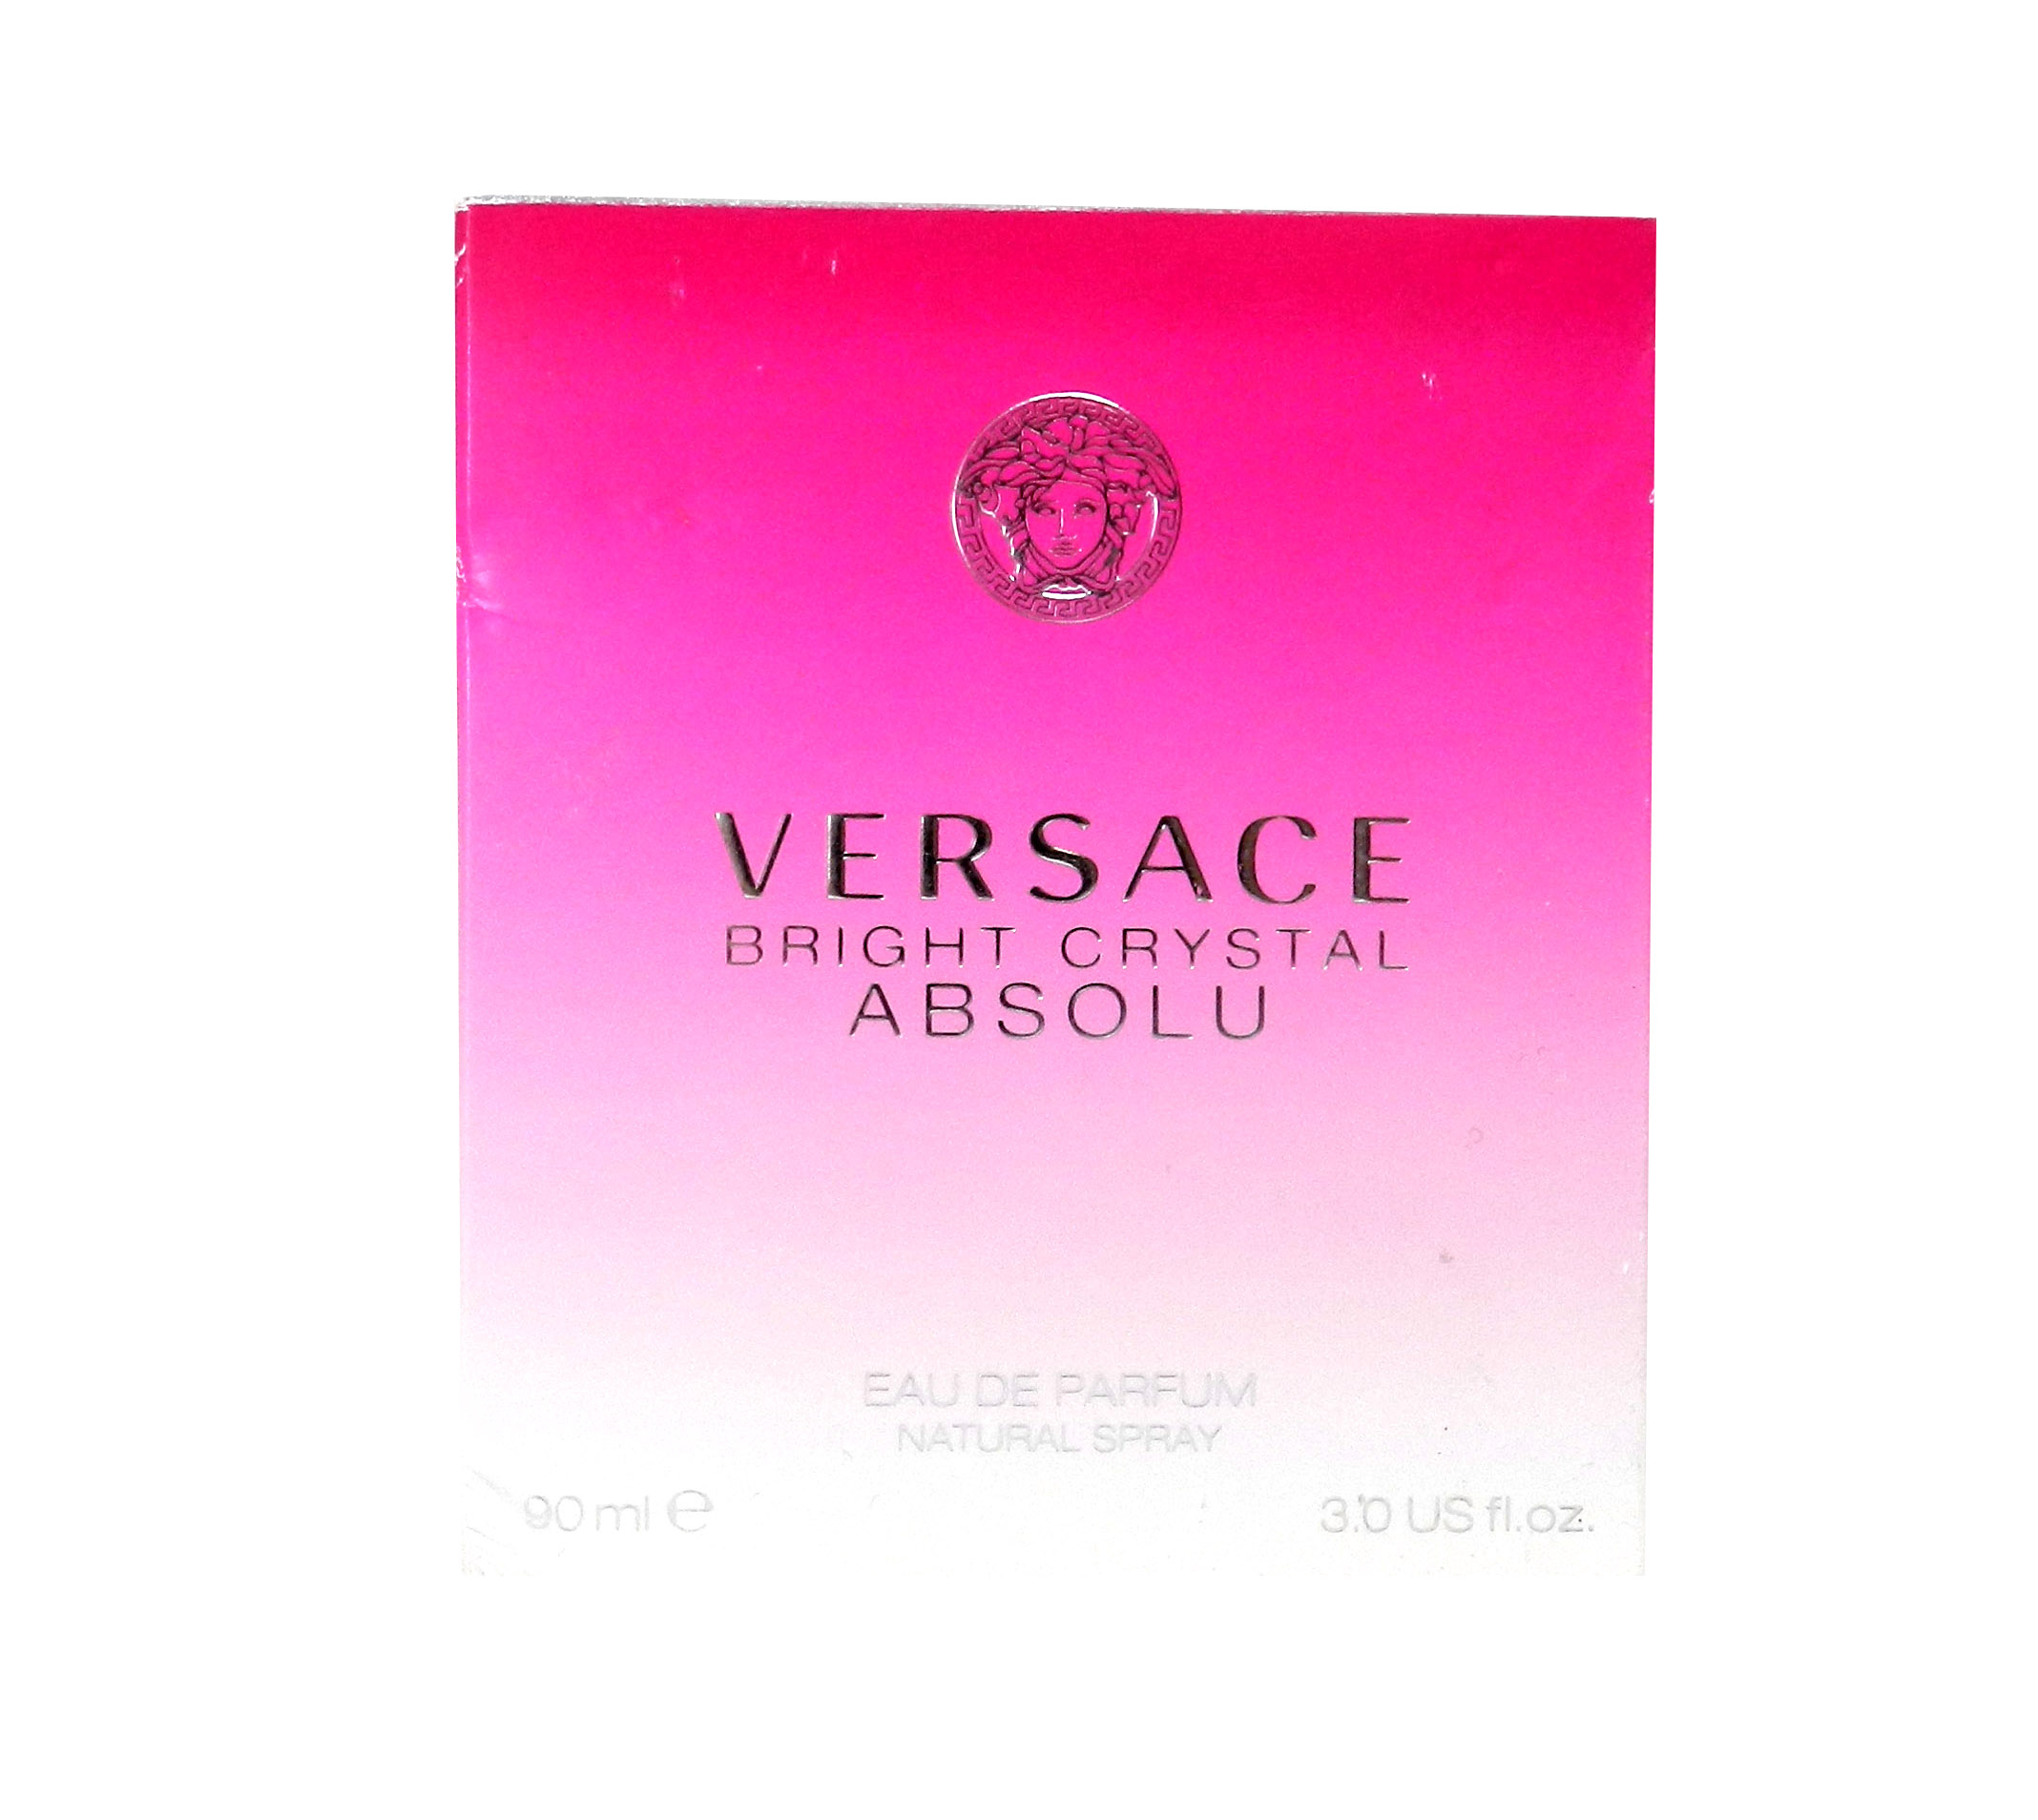 Versace Bright Crystal Absolu Eau De Parfum, Perfume for Women, 3 oz - image 2 of 3